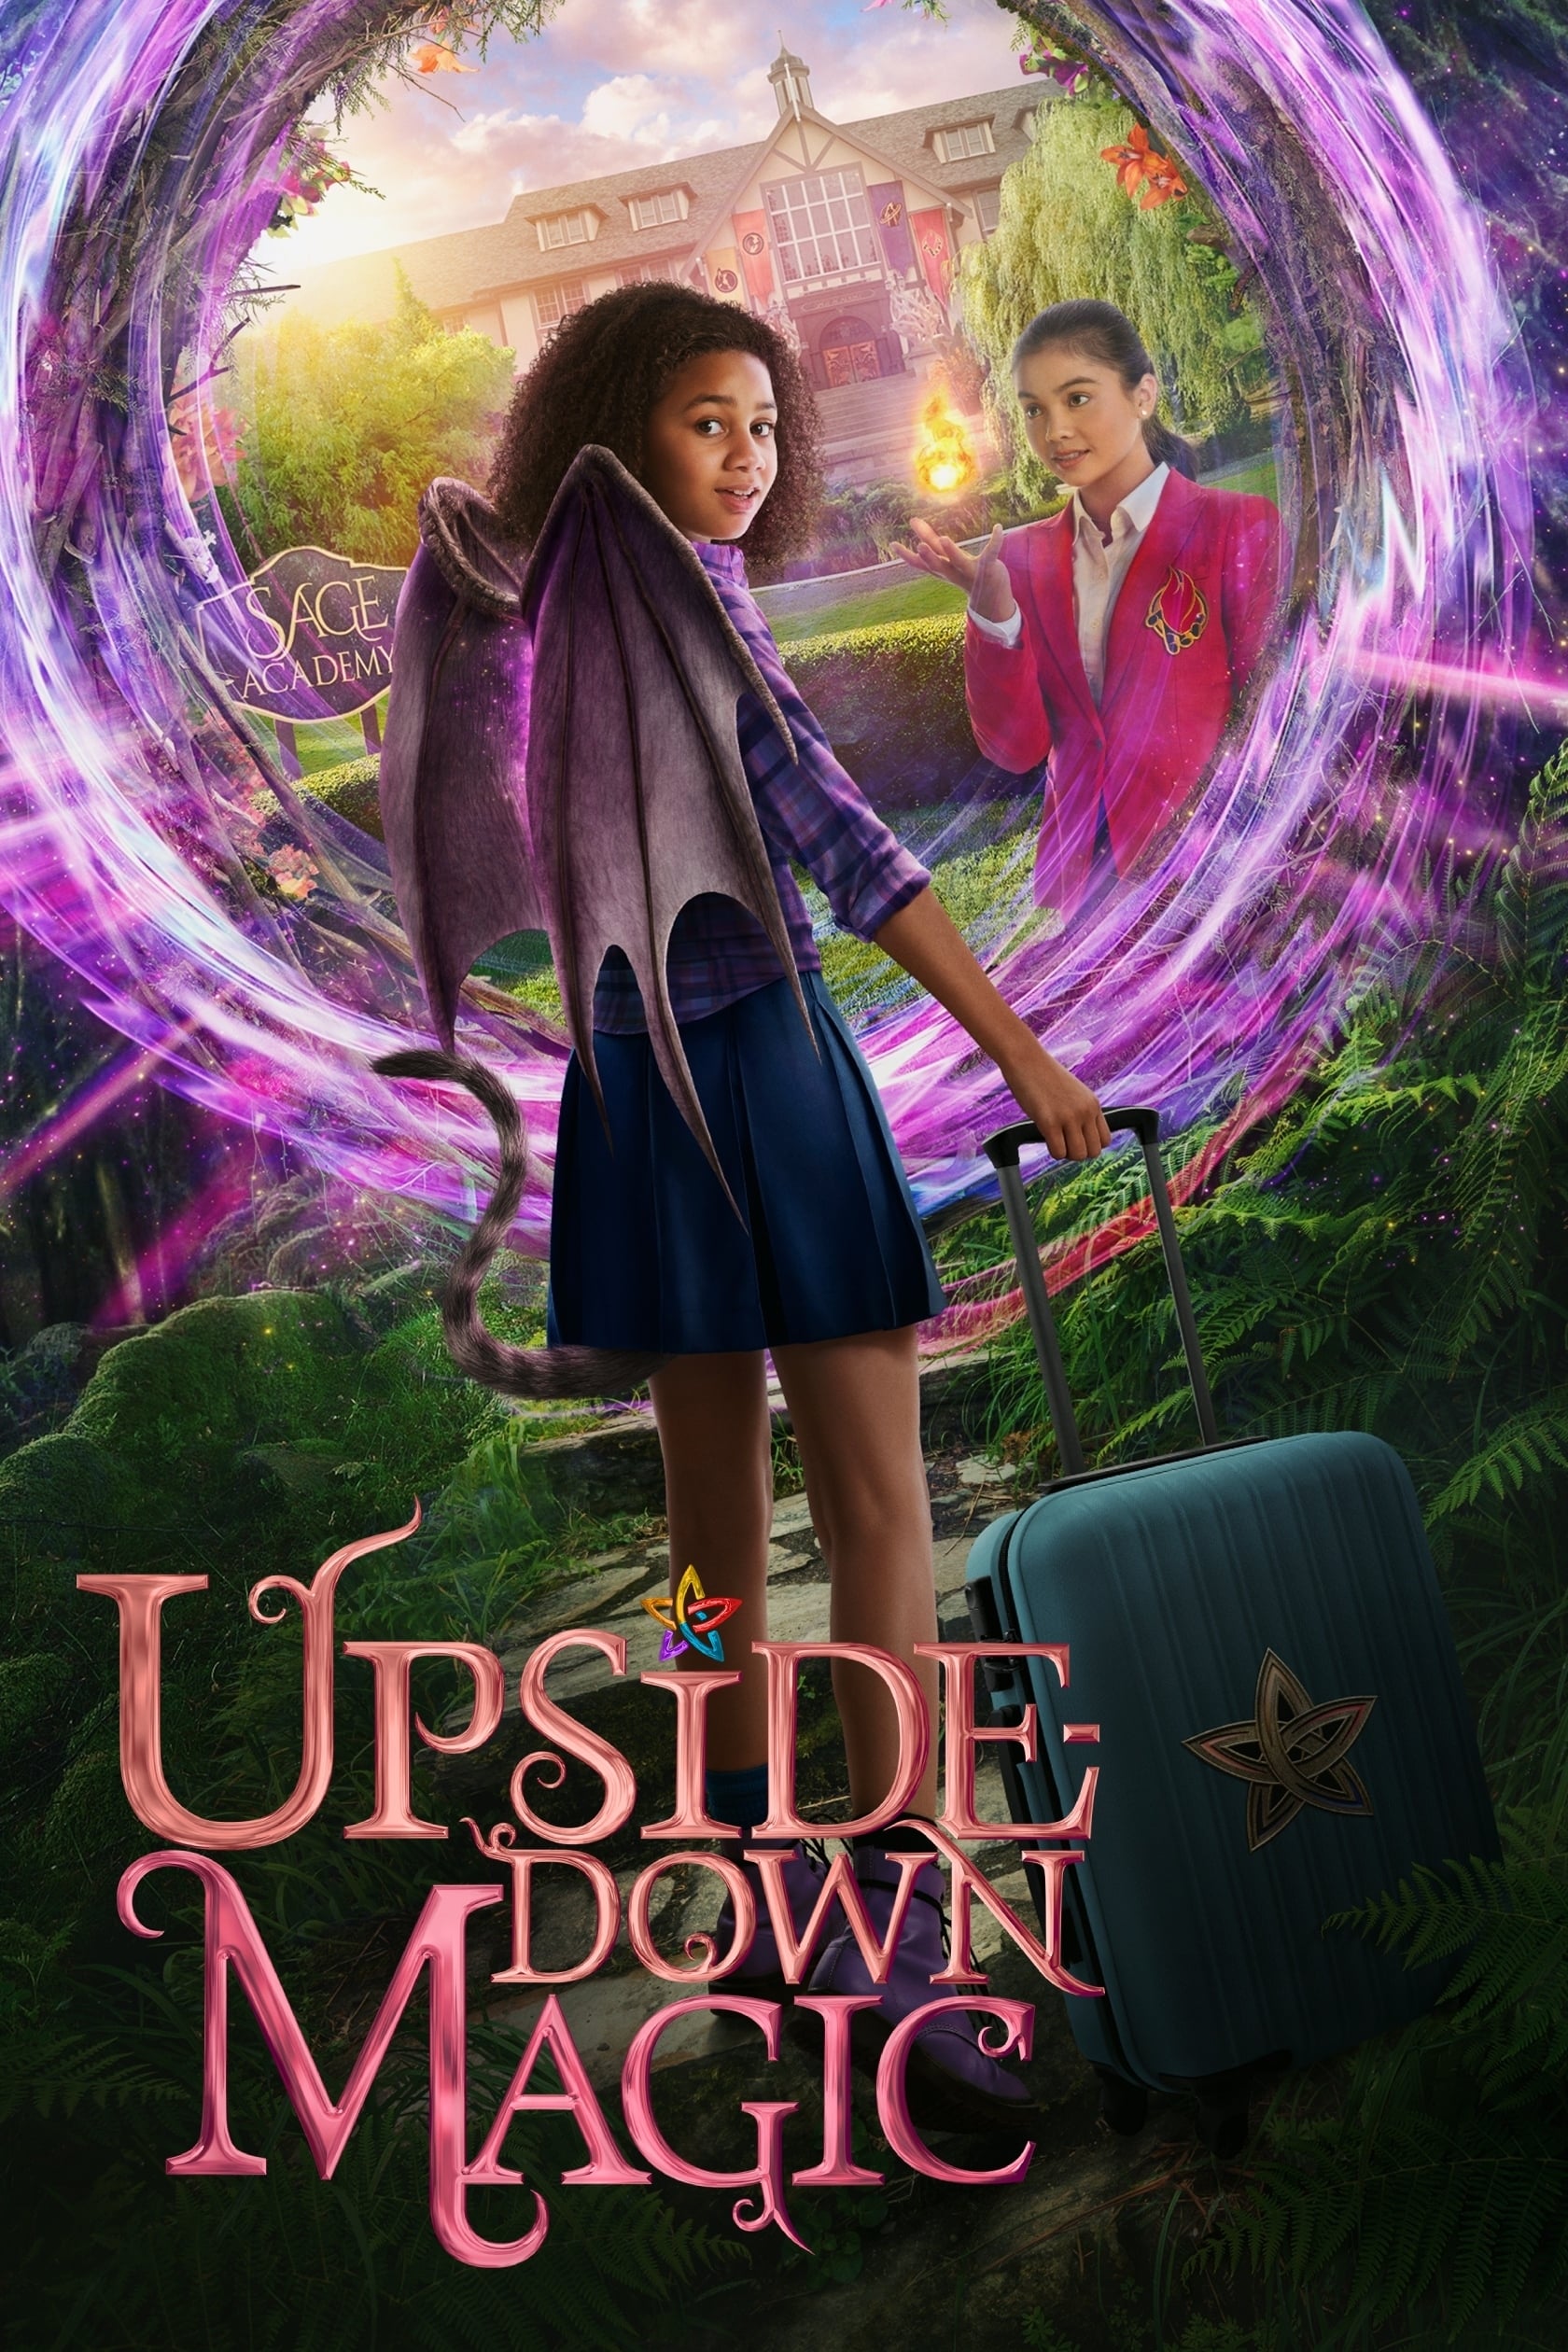 Upside-Down Magic (Upside-Down Magic) [2020]